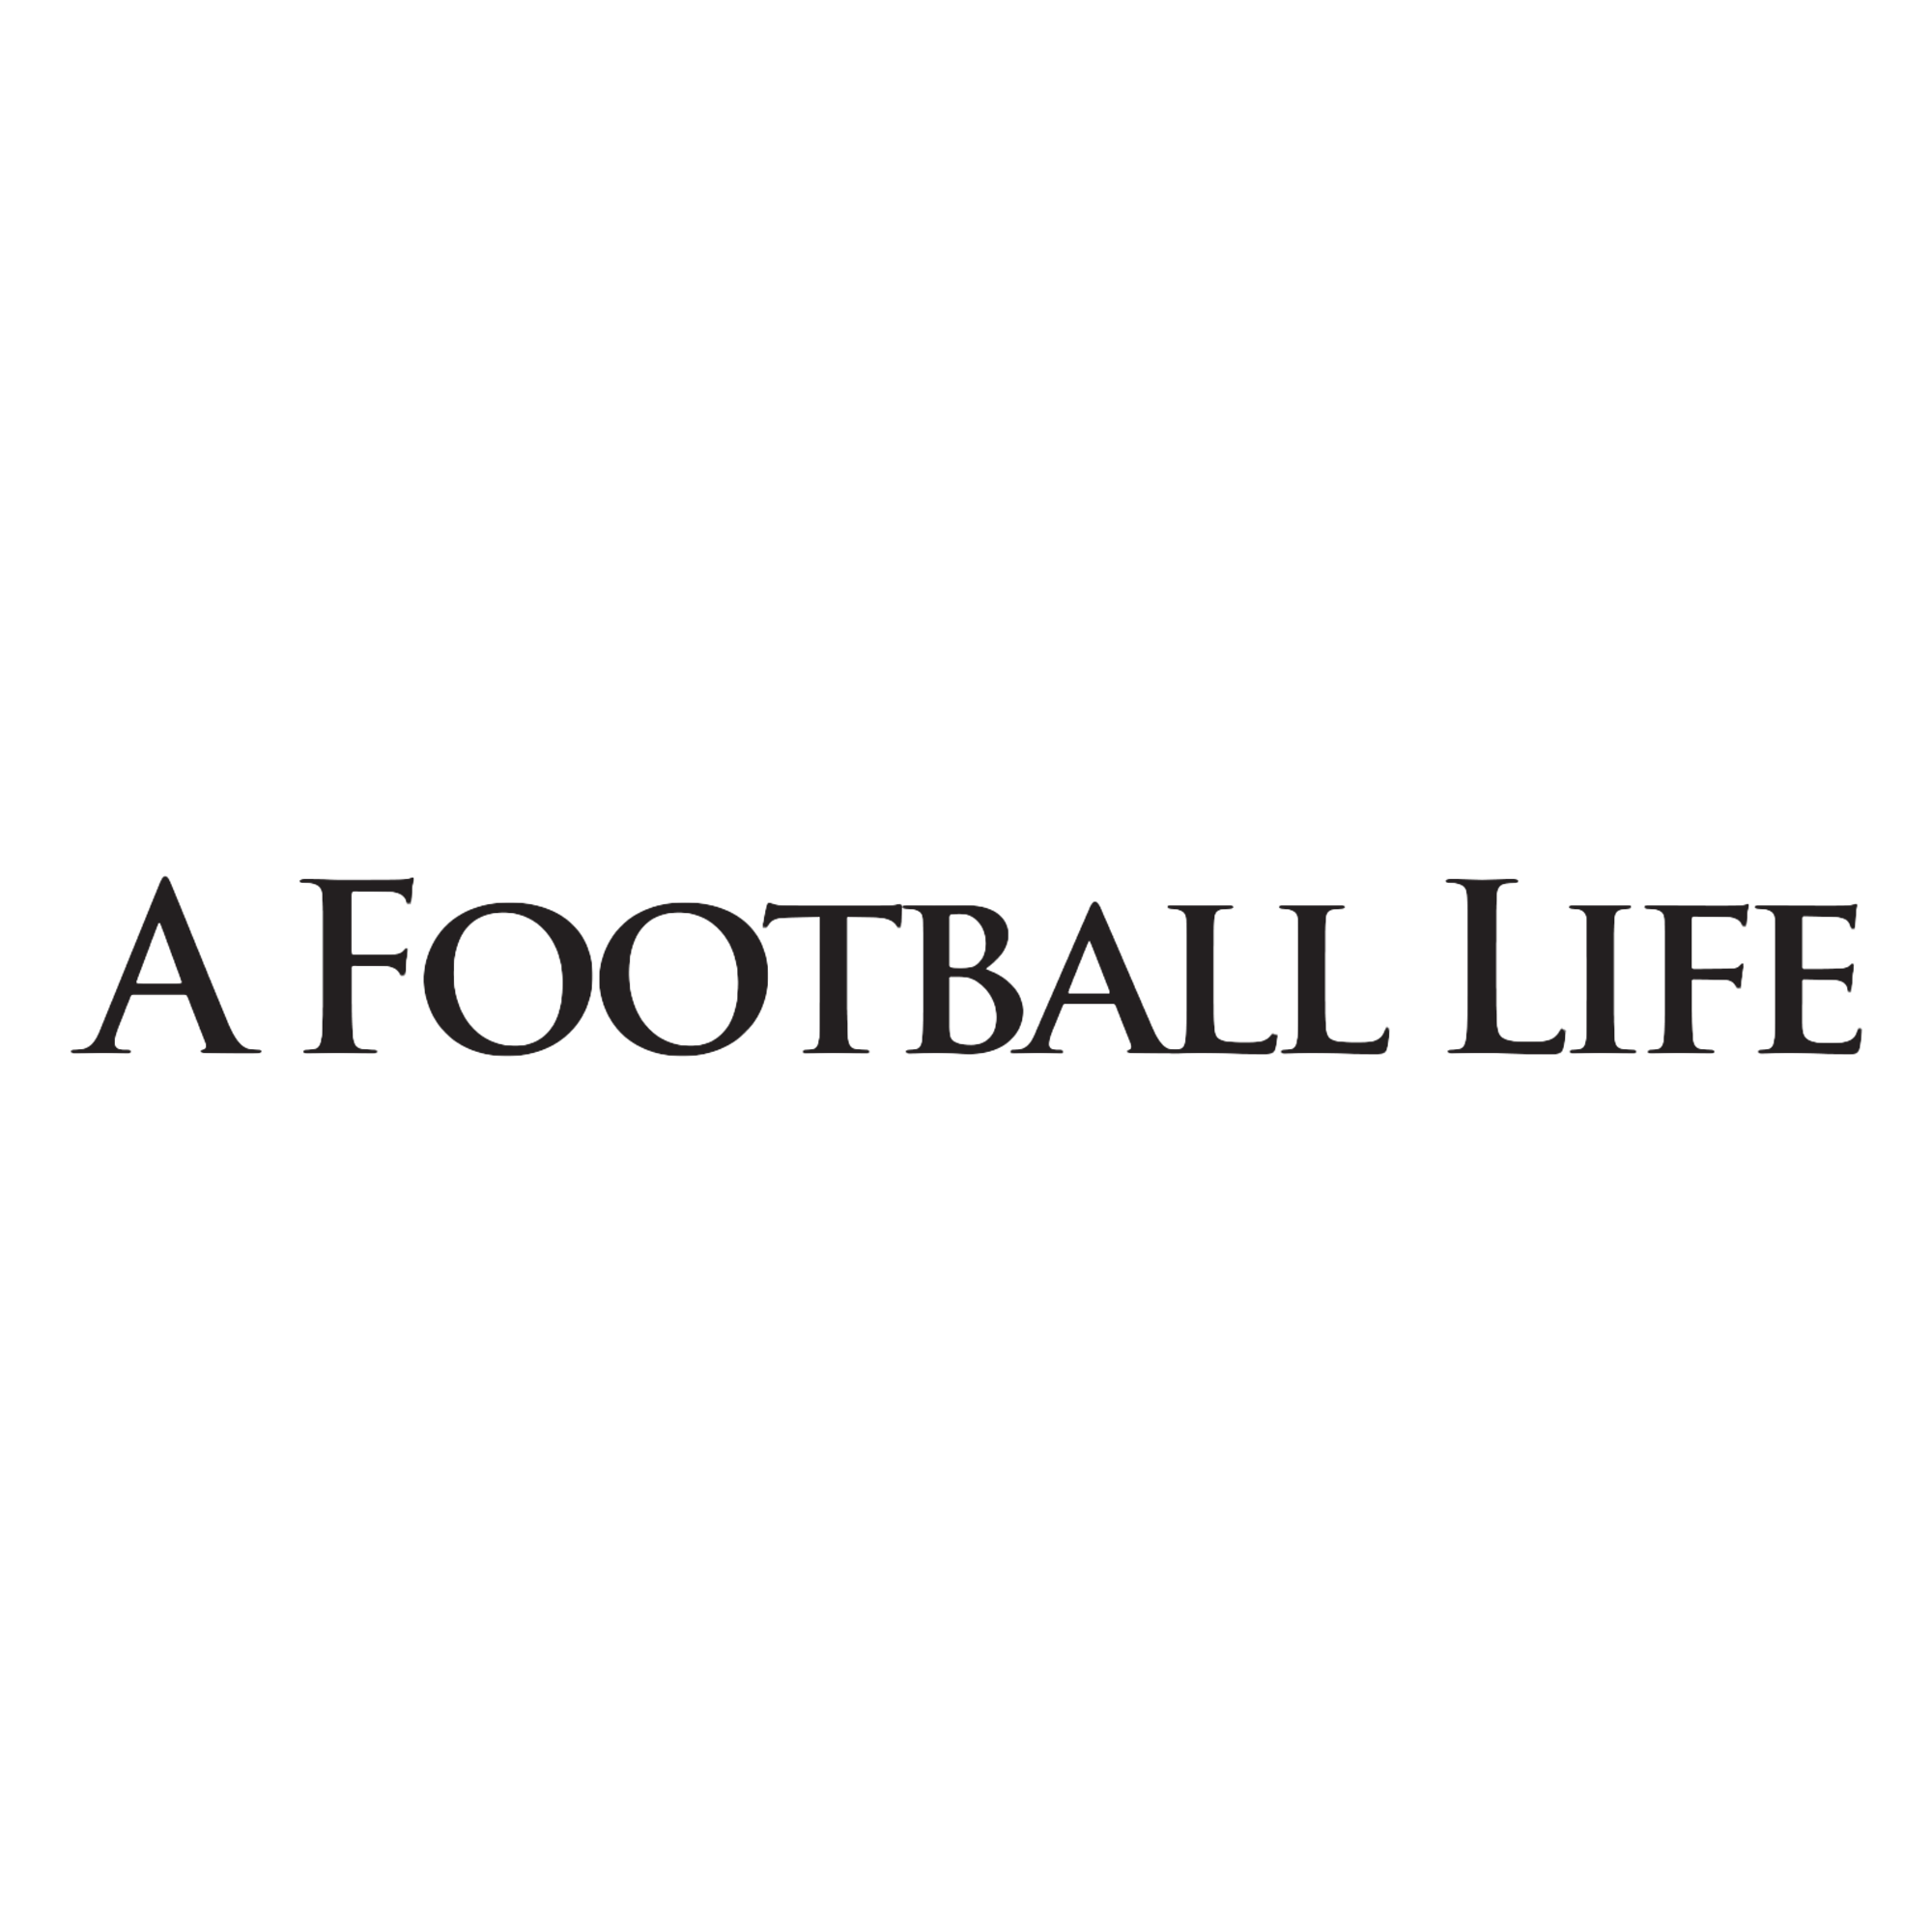 A Football Life